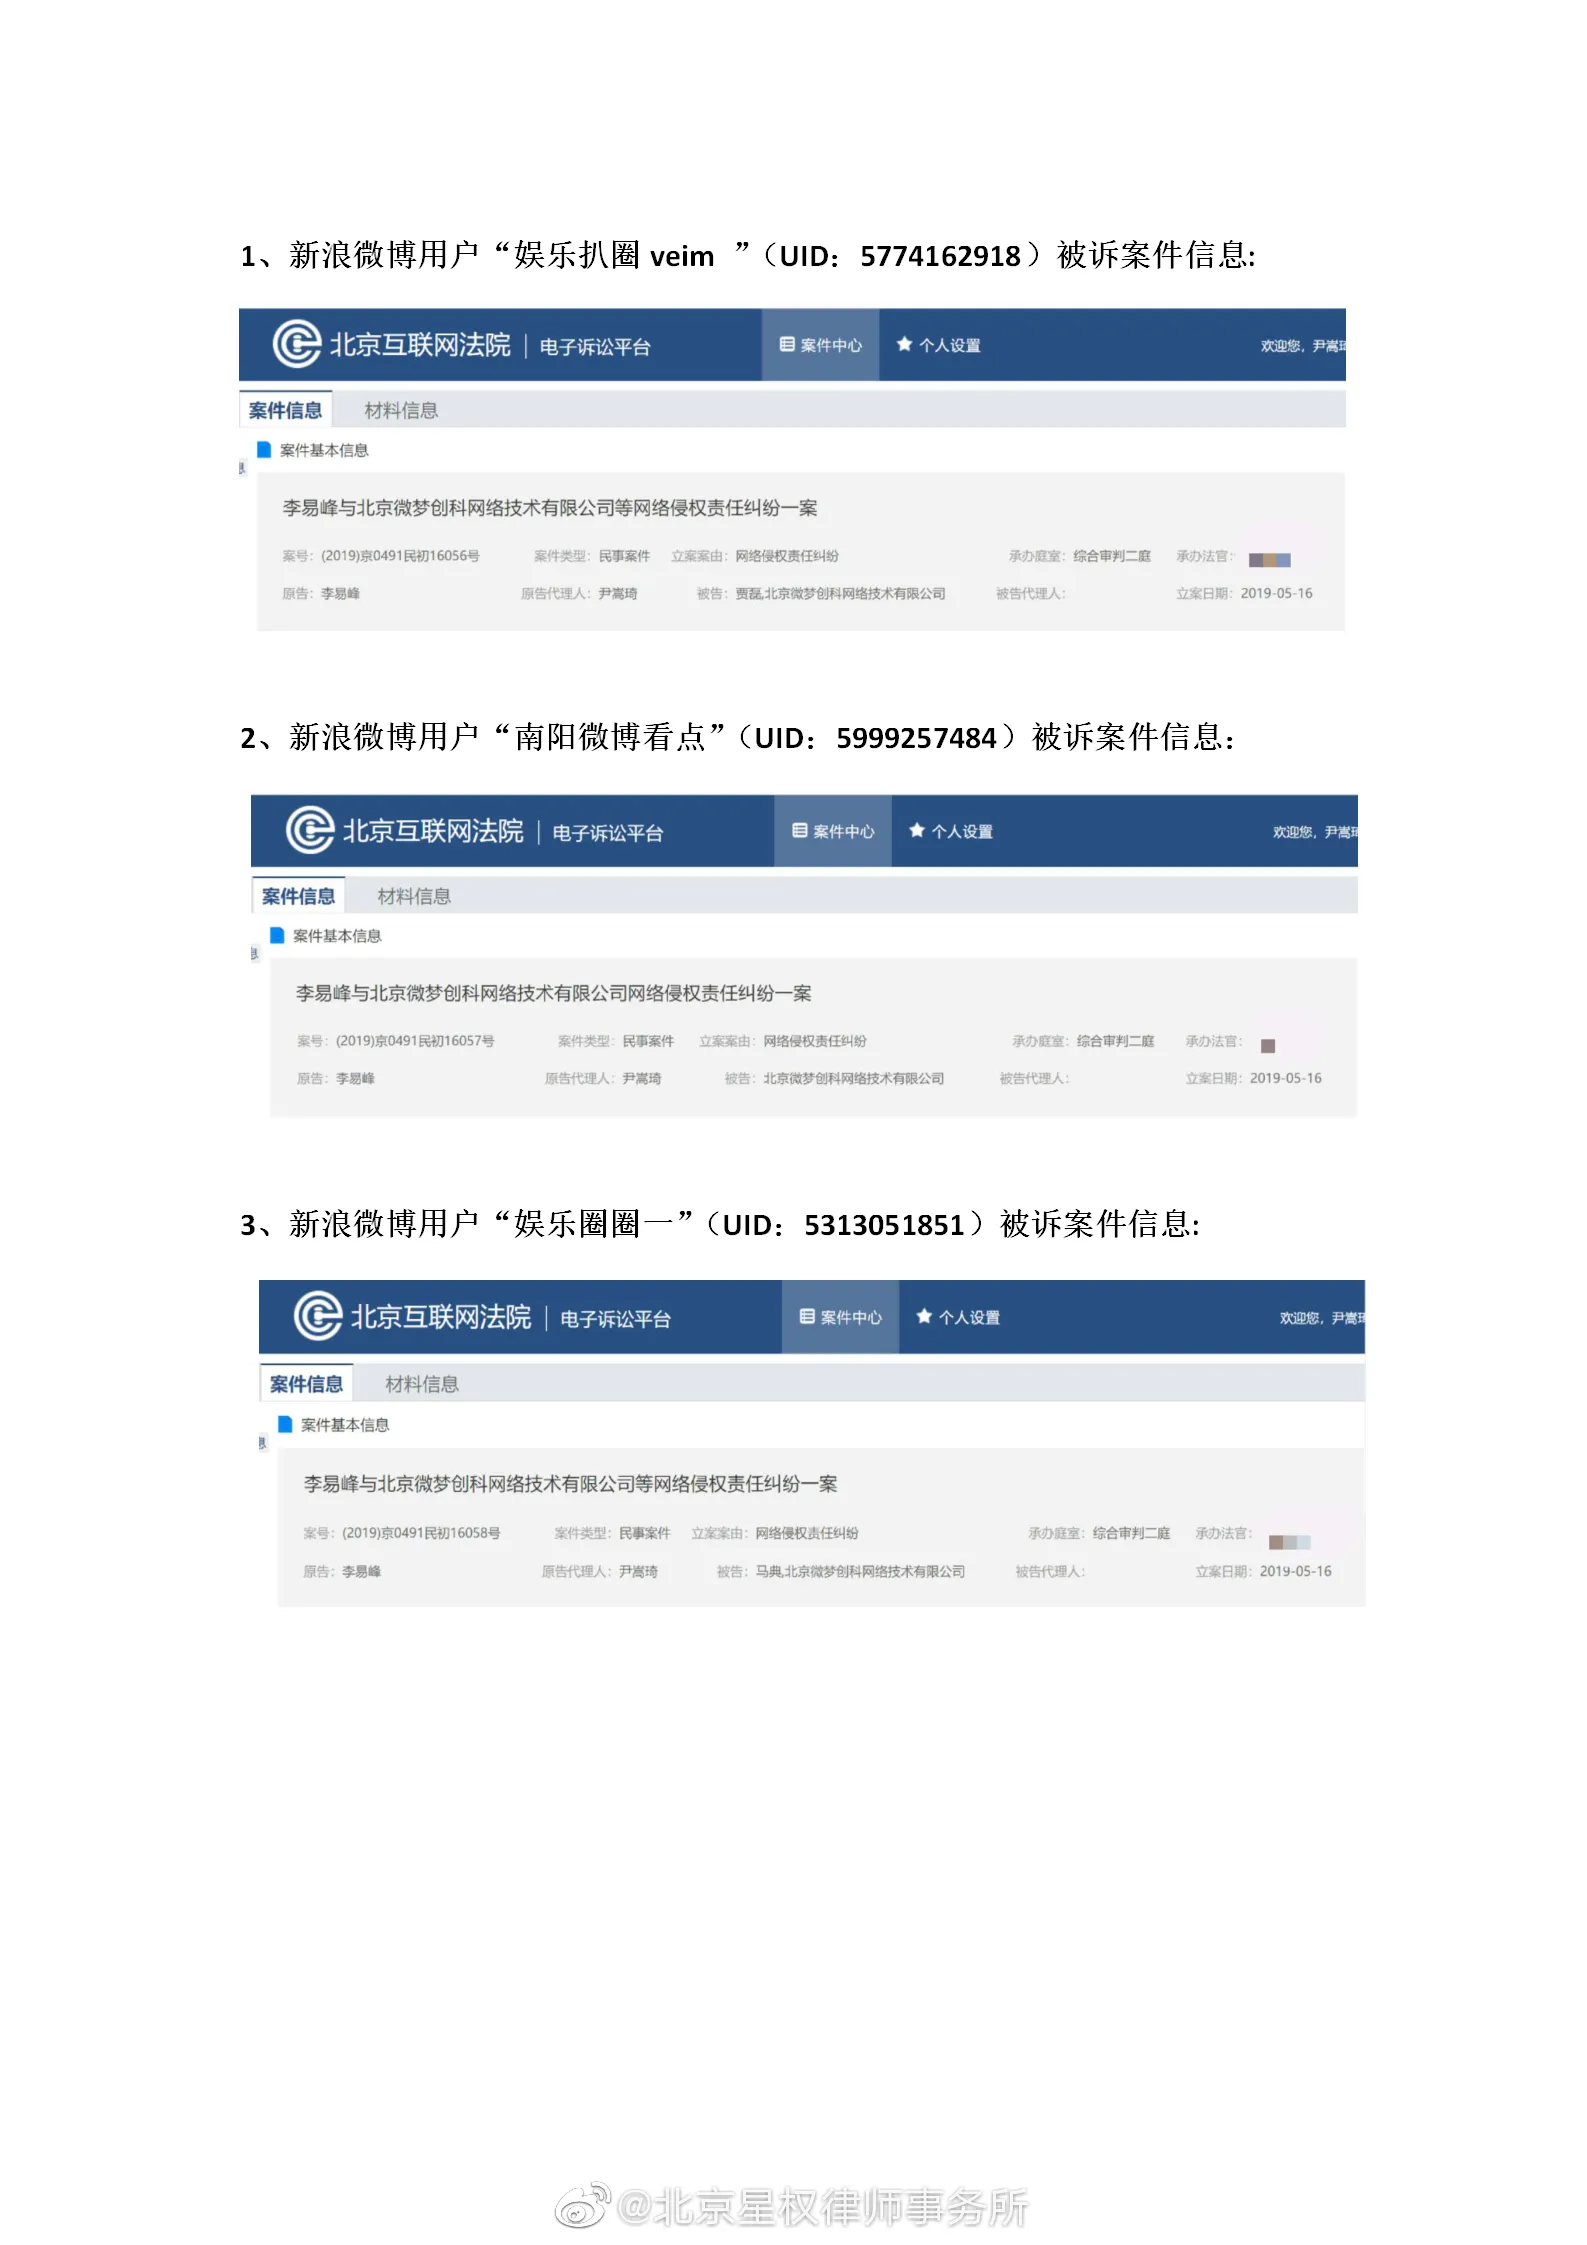  Li Yifeng 起诉造谣用户.jpg